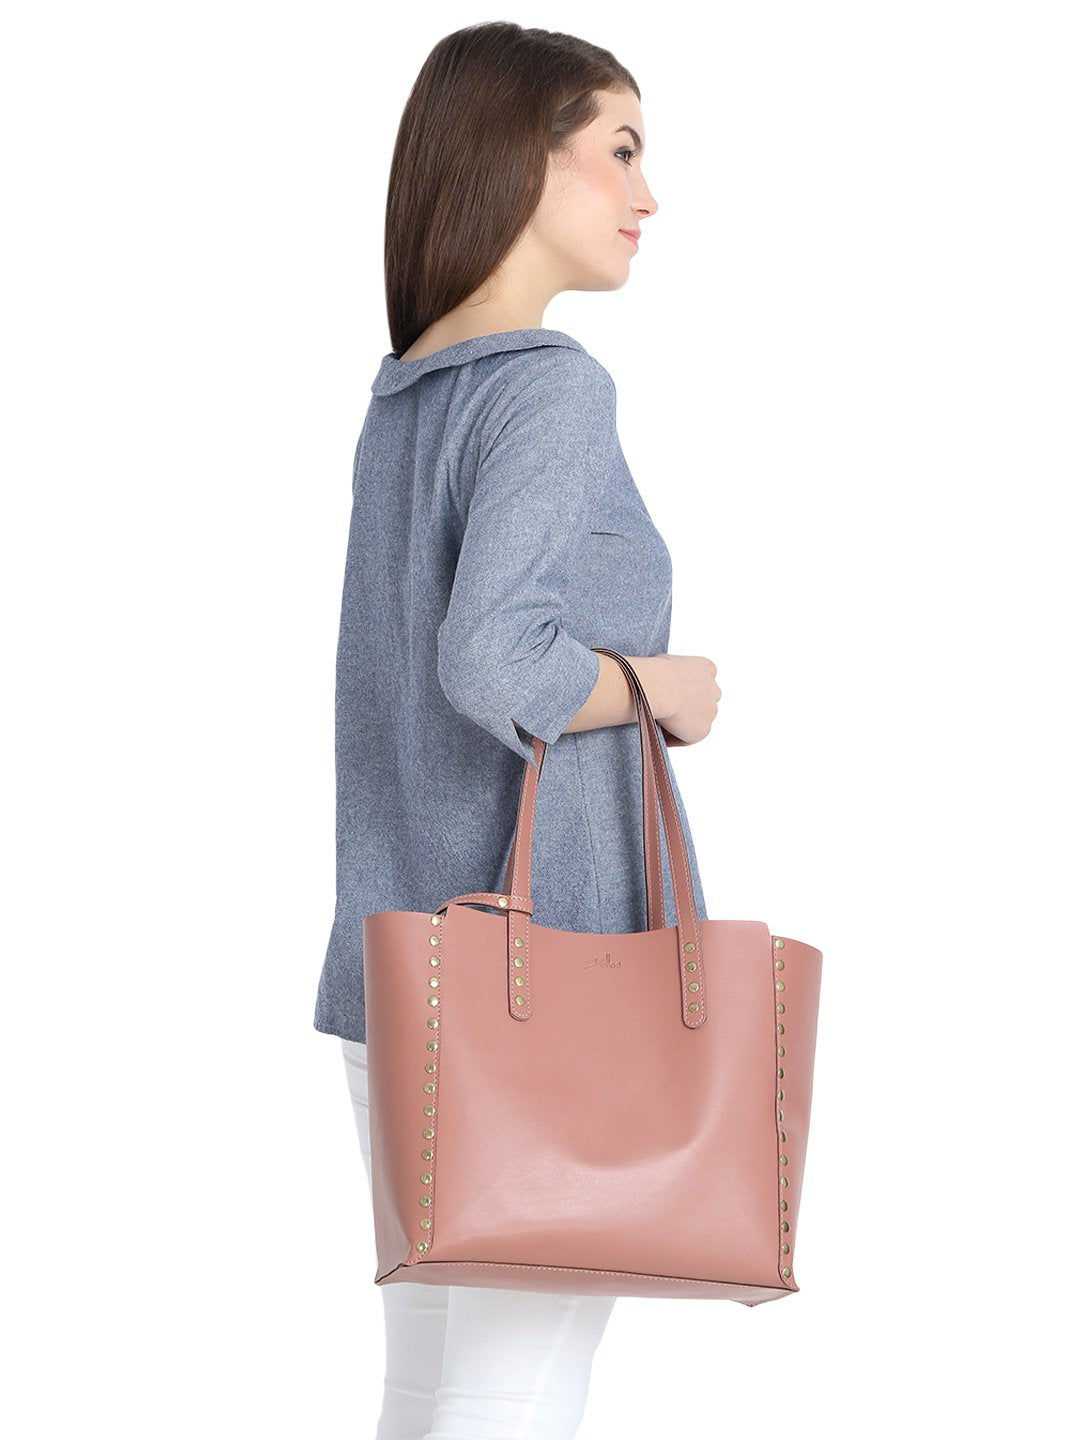 Women's Embellished Tote Bag in (Pink)